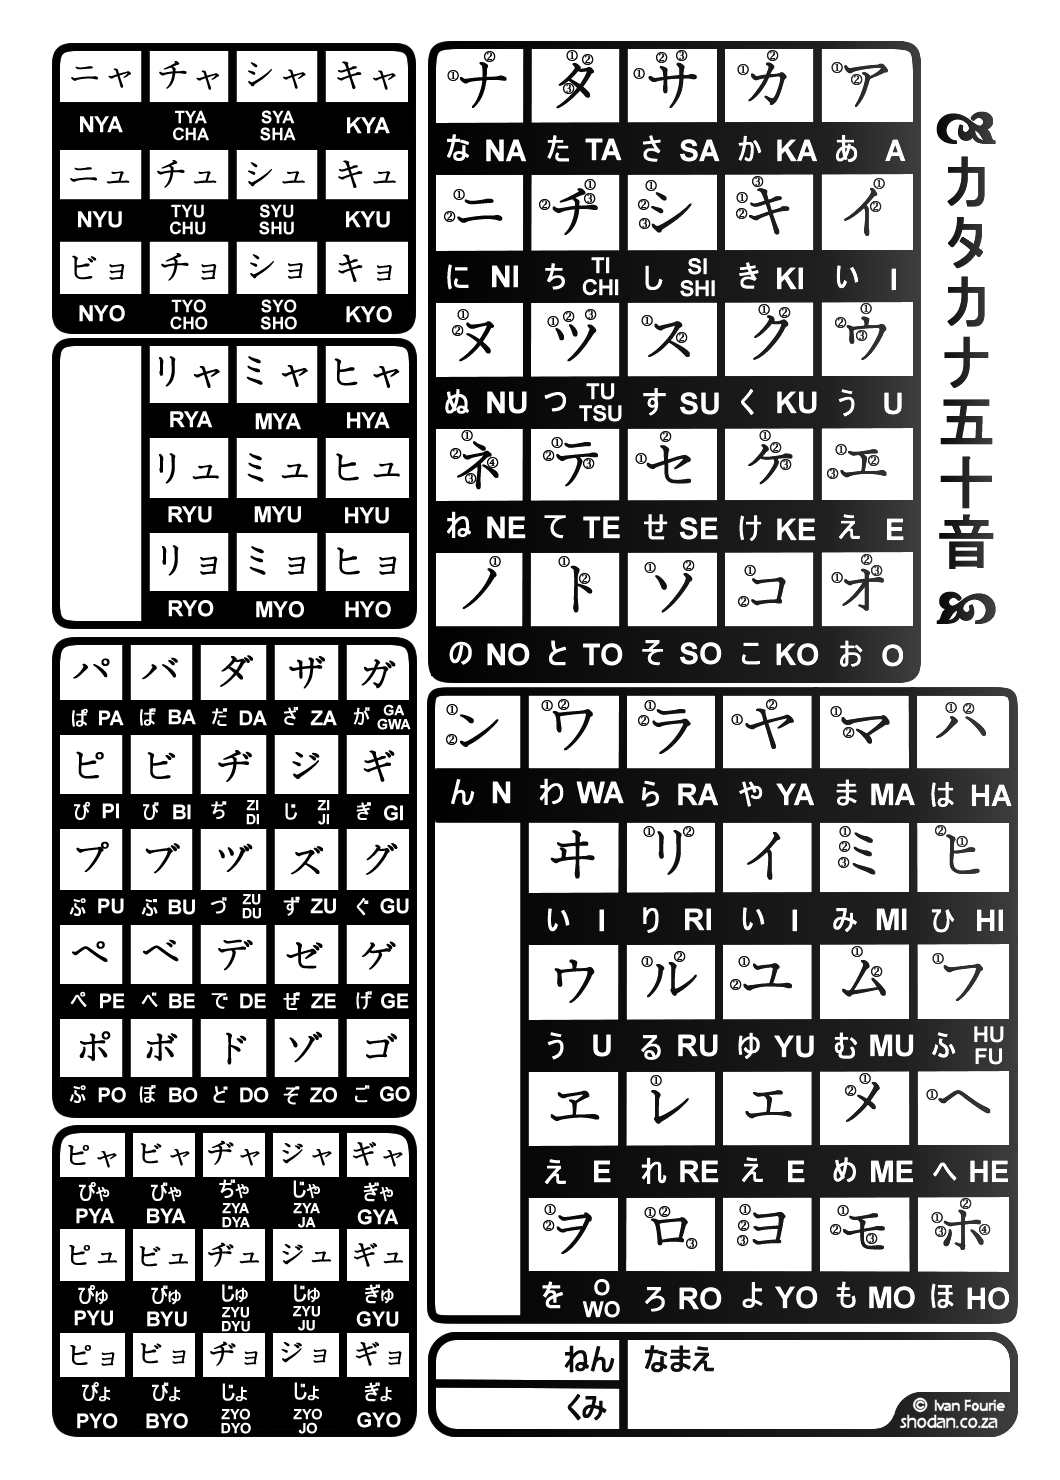 Belajar Bahasa Jepang: Bagian 2, Huruf Katakana ~ Kishi 